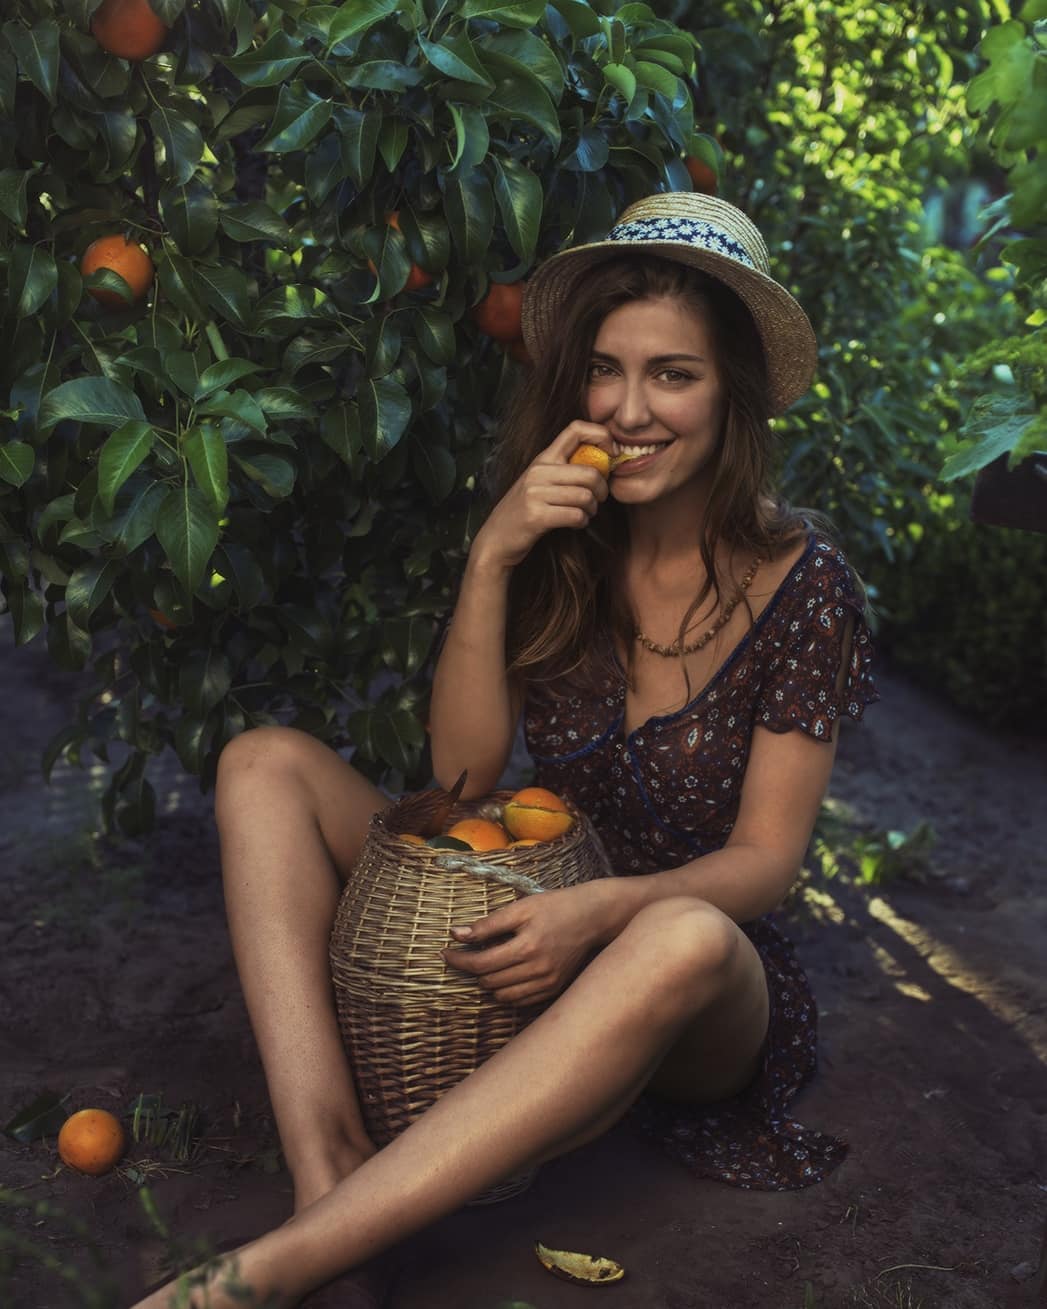 David Dubnitskiy Model Women Outdoors Fruit Smiling Sitting Hat 1047x1309